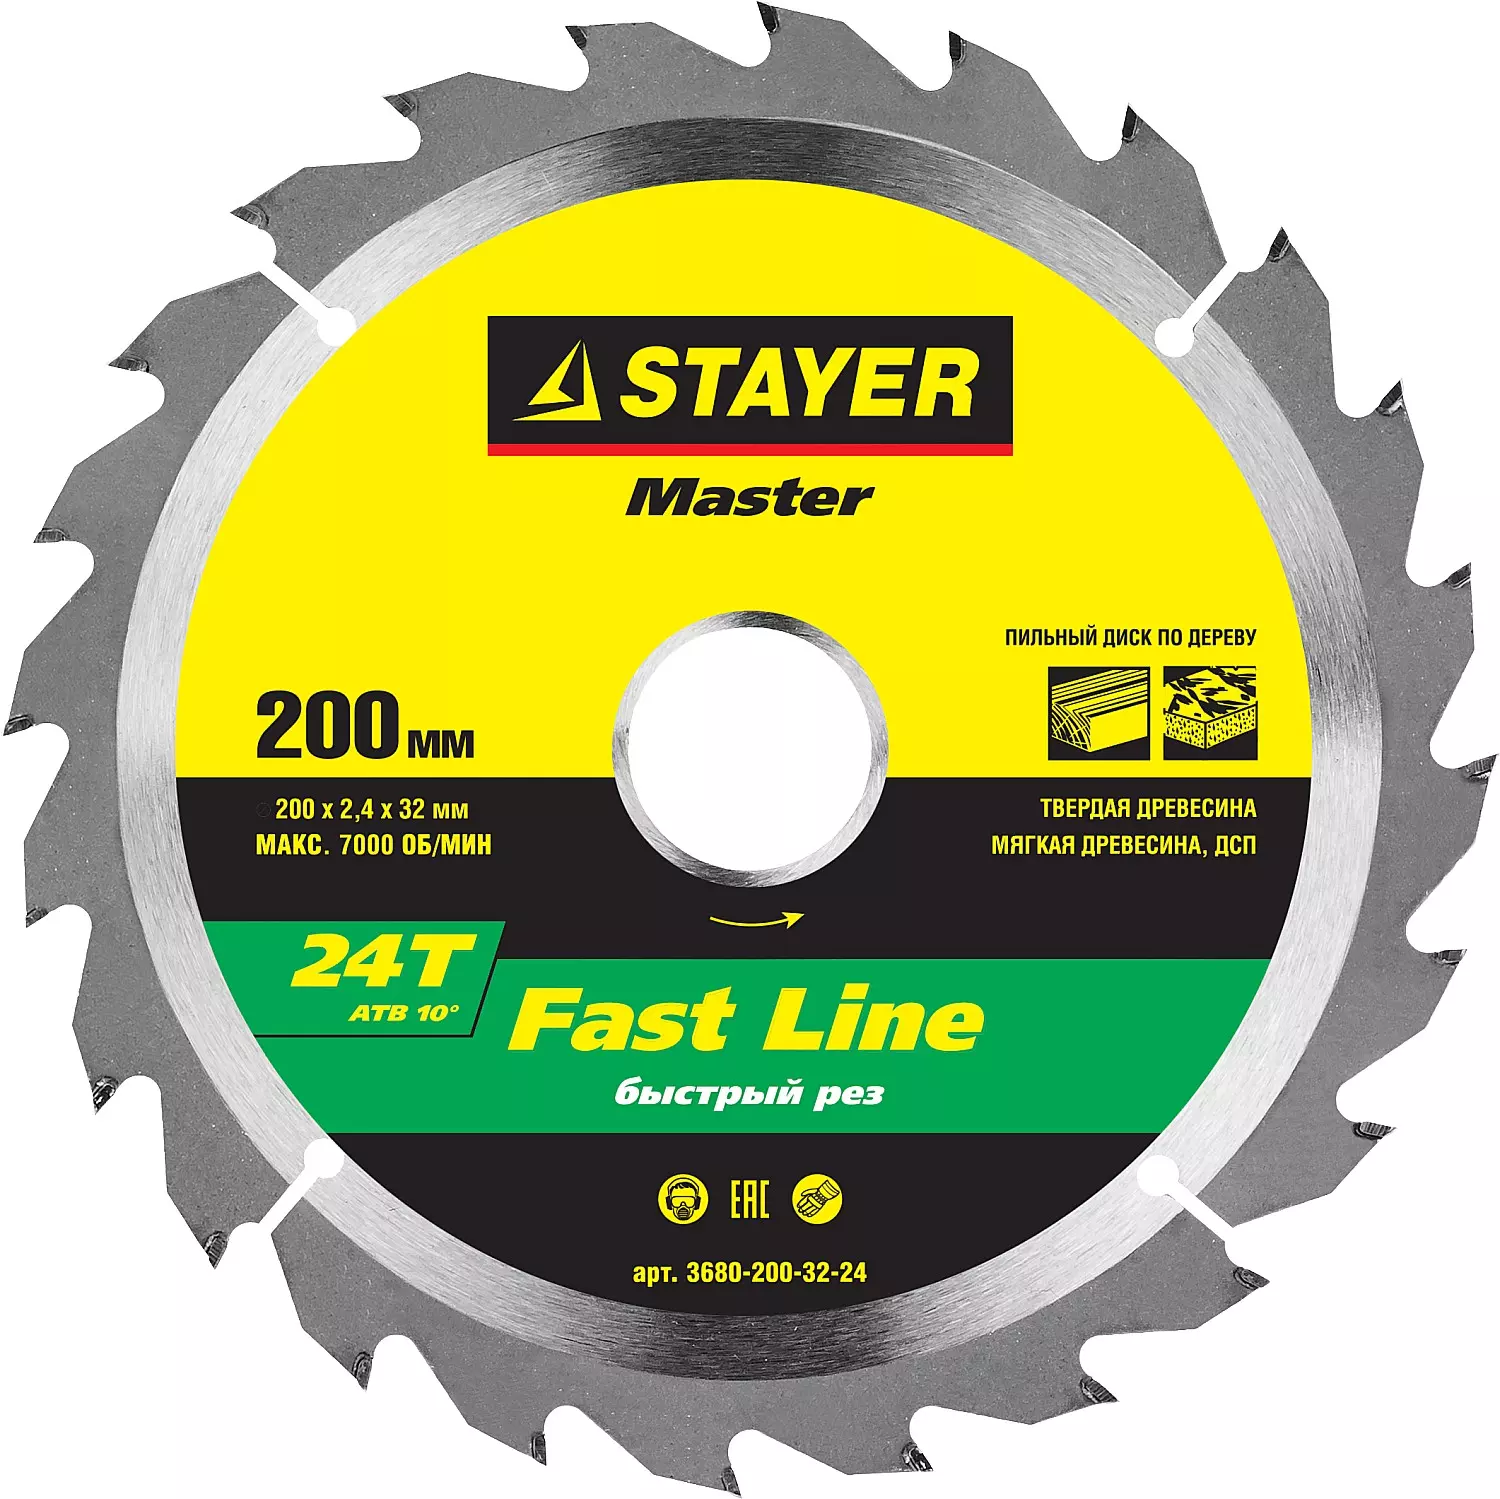 Пильный диск Stayer FAST-Line по дереву, 200х32мм 3680-200-32-24